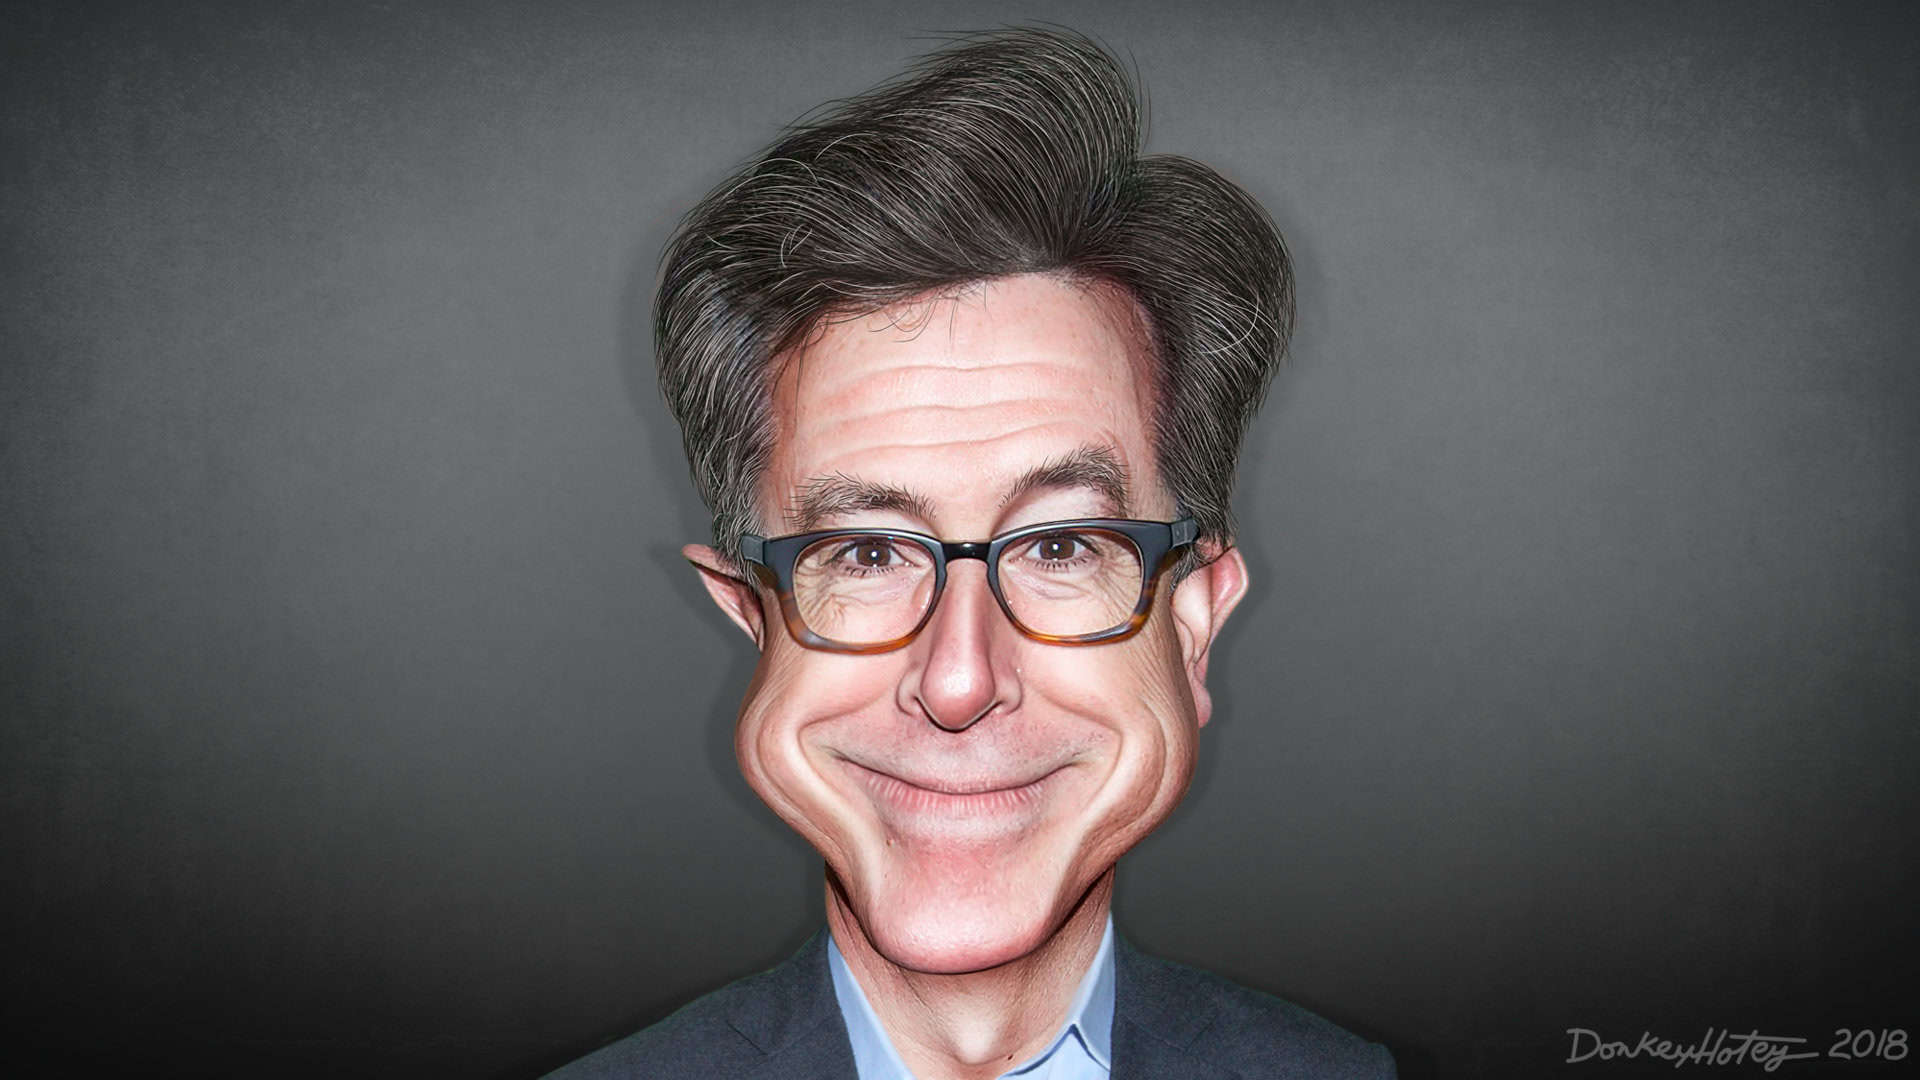 Caricature of Stephen Colbert